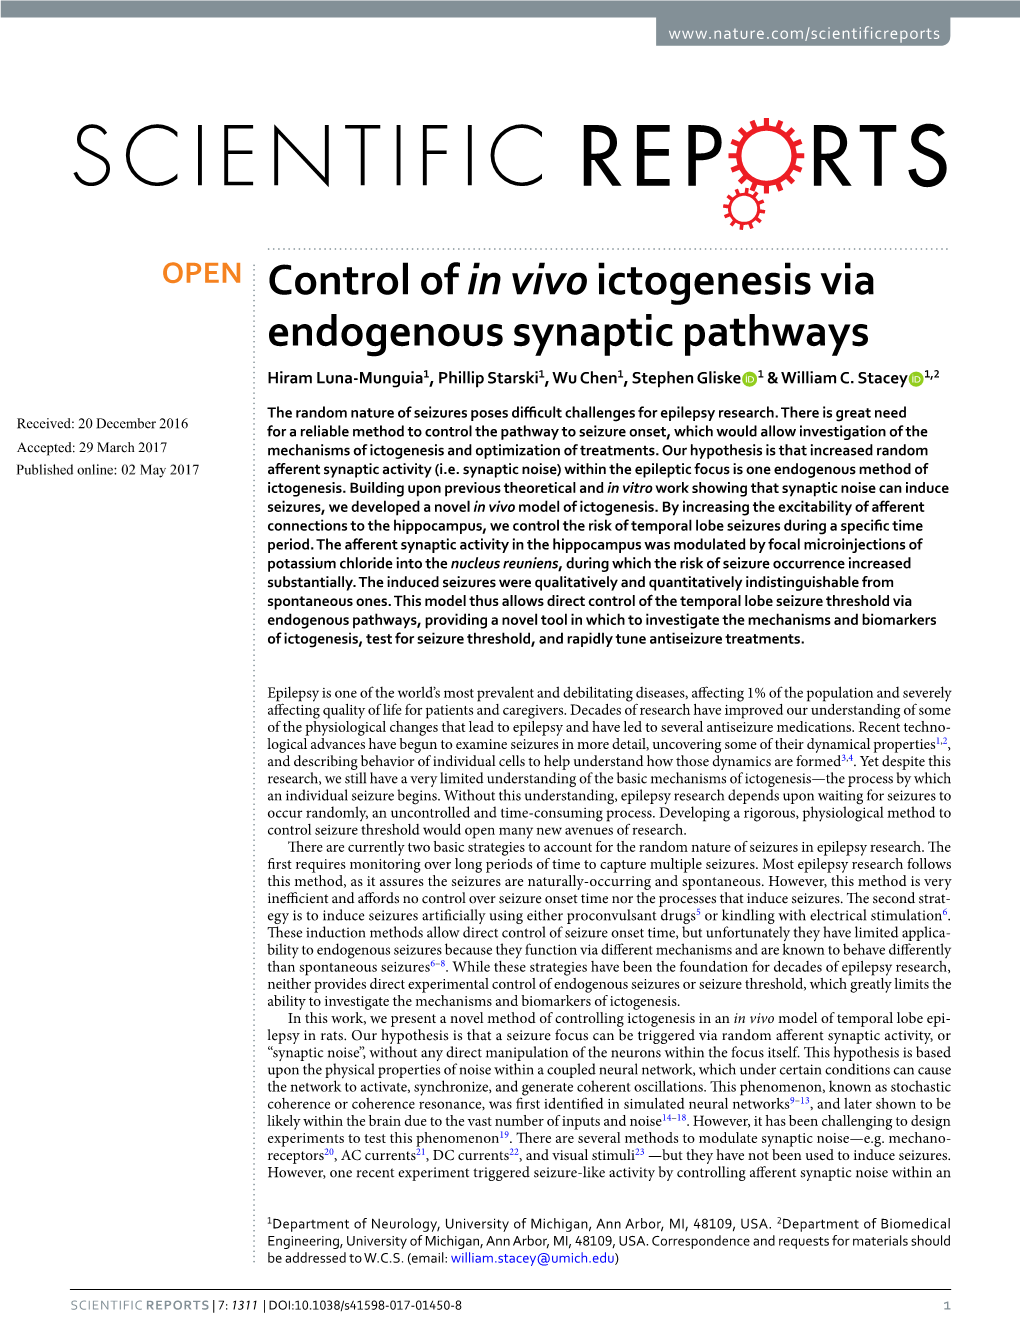 Control of in Vivo Ictogenesis Via Endogenous Synaptic Pathways Hiram Luna-Munguia1, Phillip Starski1, Wu Chen1, Stephen Gliske 1 & William C